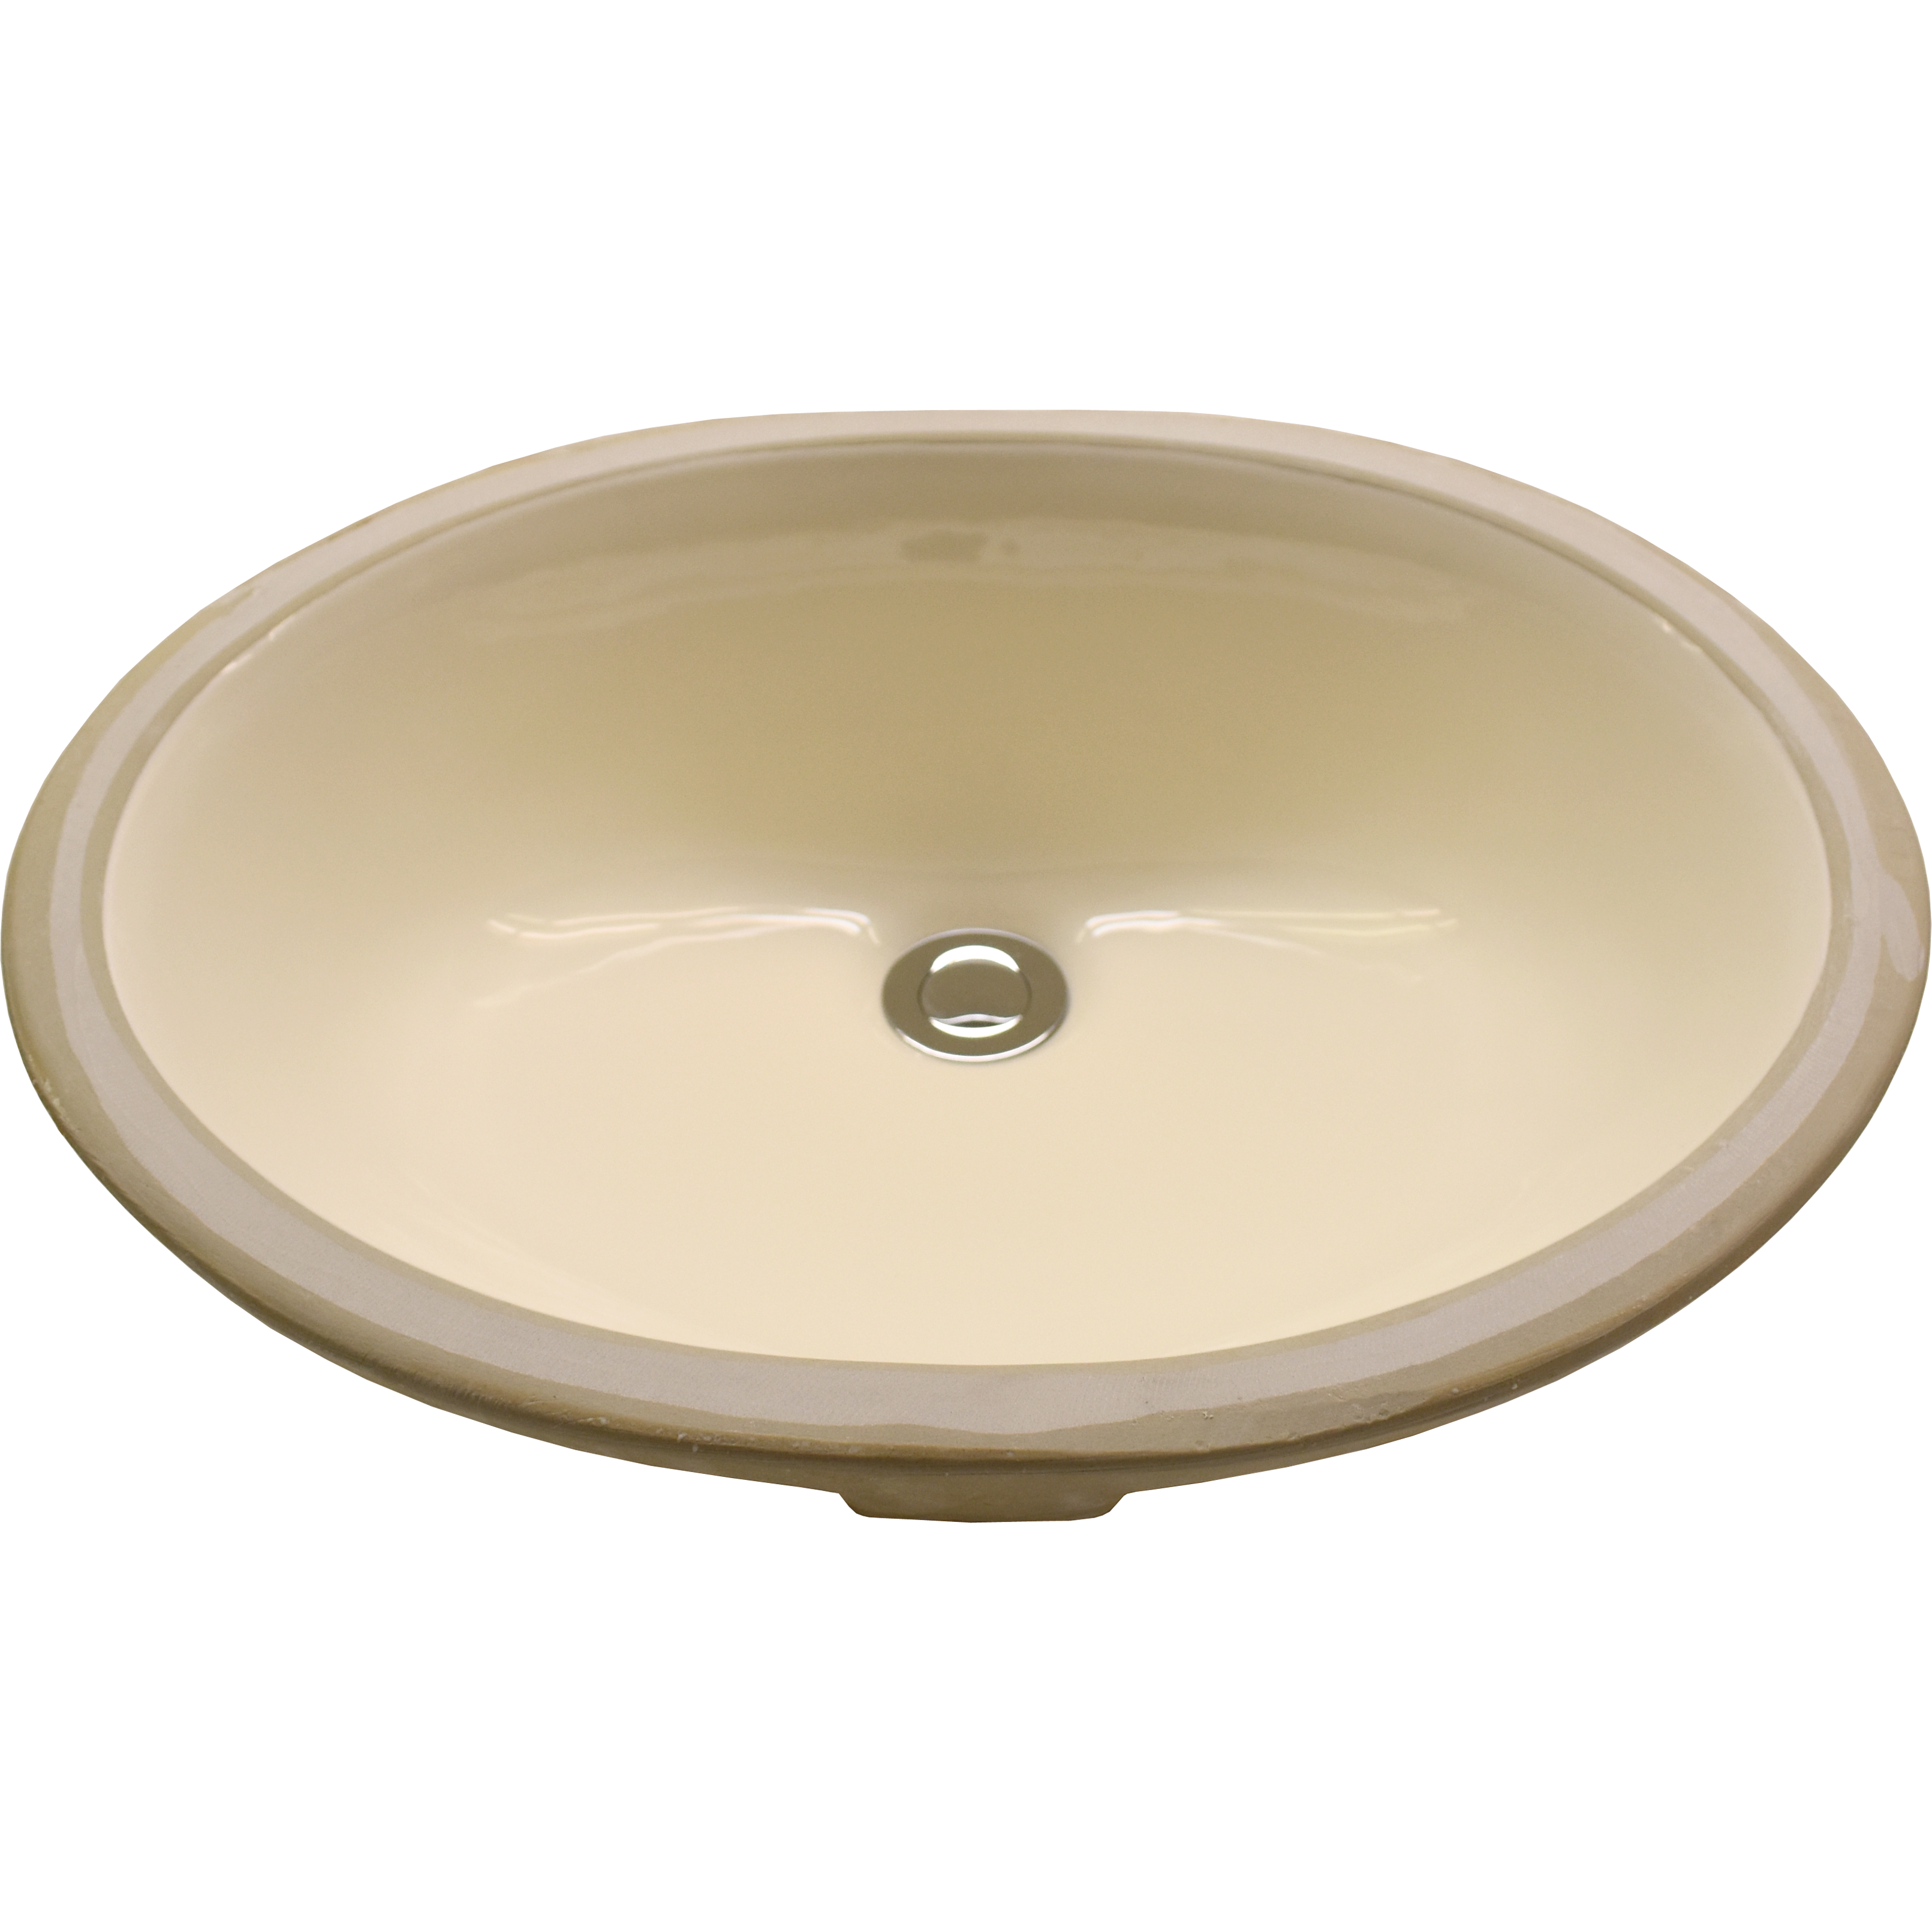 Alpha Model A1815 – Oval Porcelain Undermount Sink - A1815